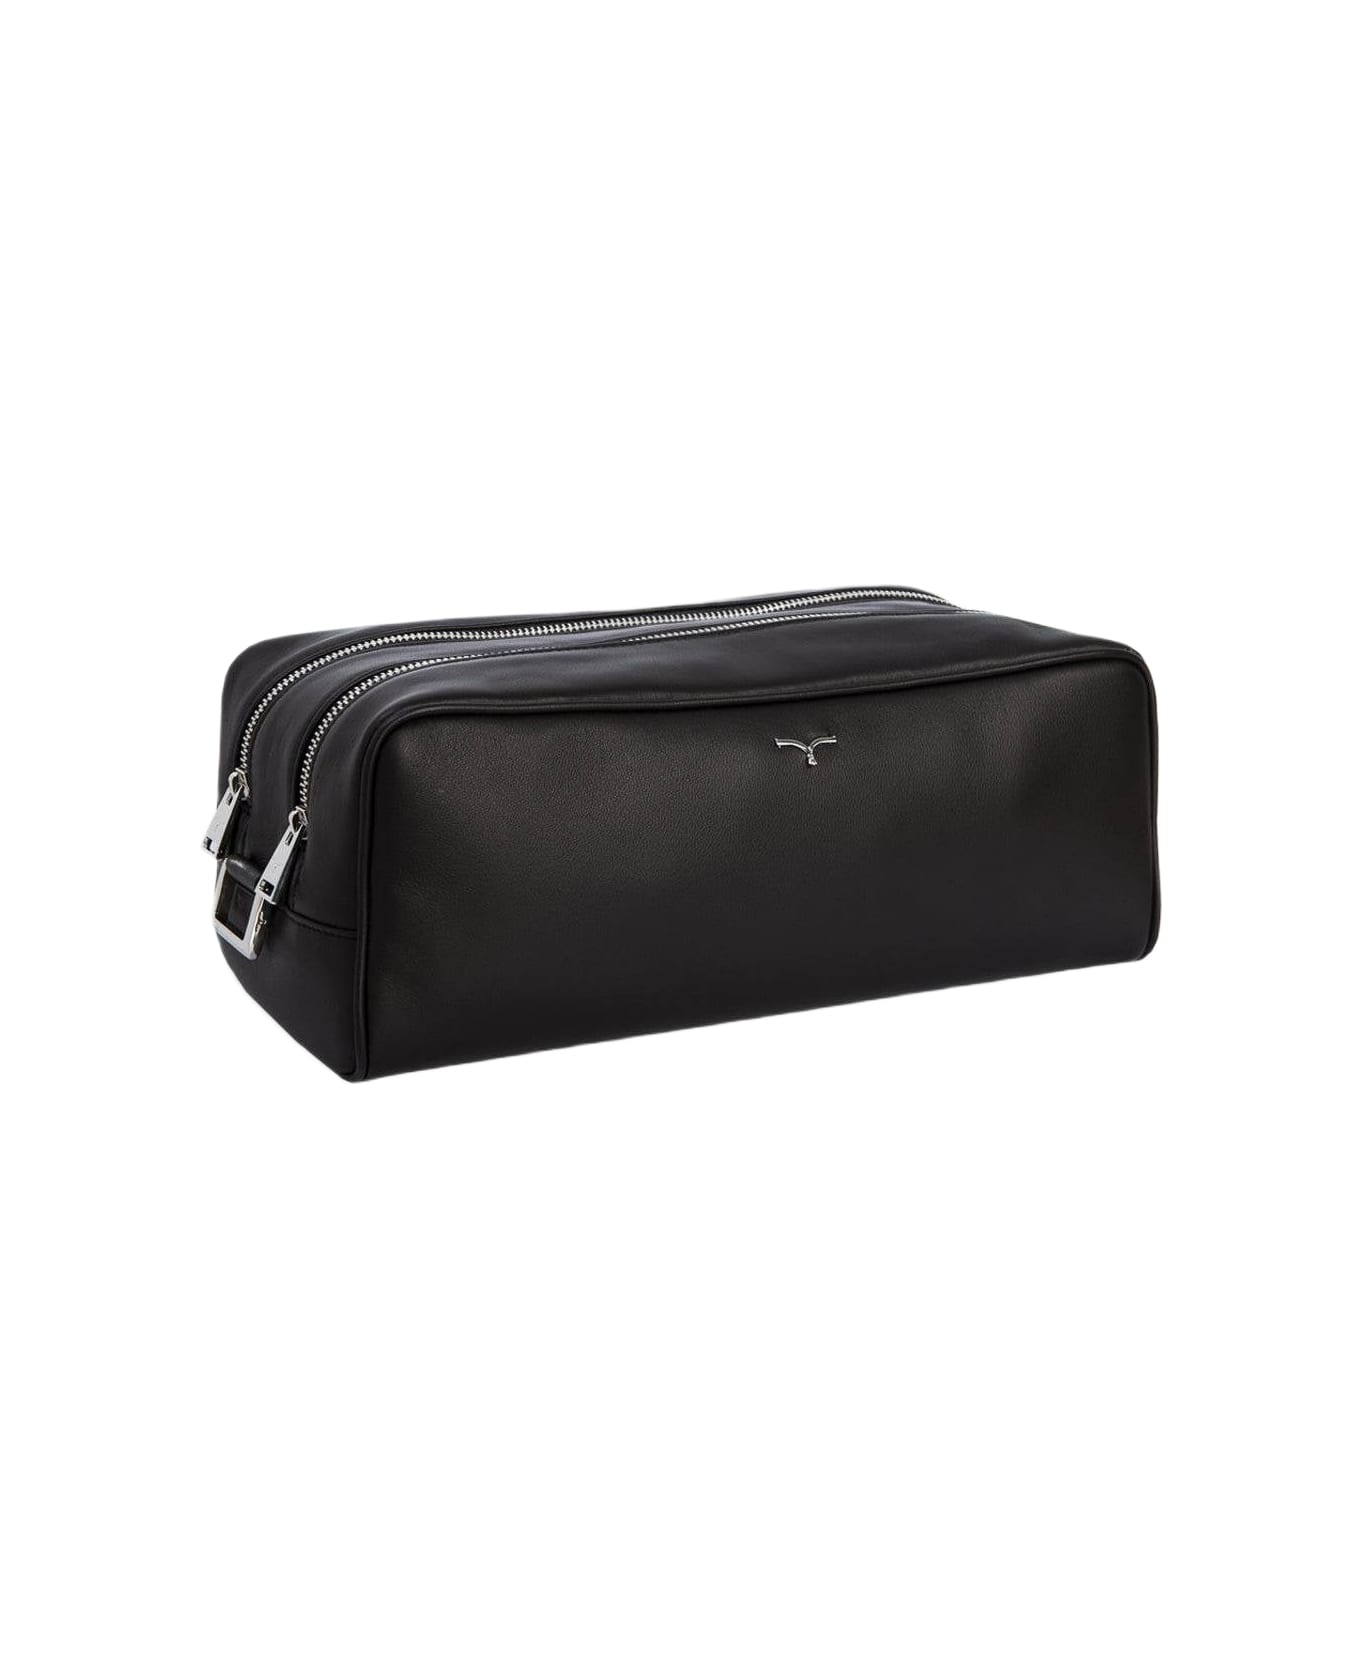 Larusmiani Wash Bag'tzar' Luggage - Black トラベルバッグ